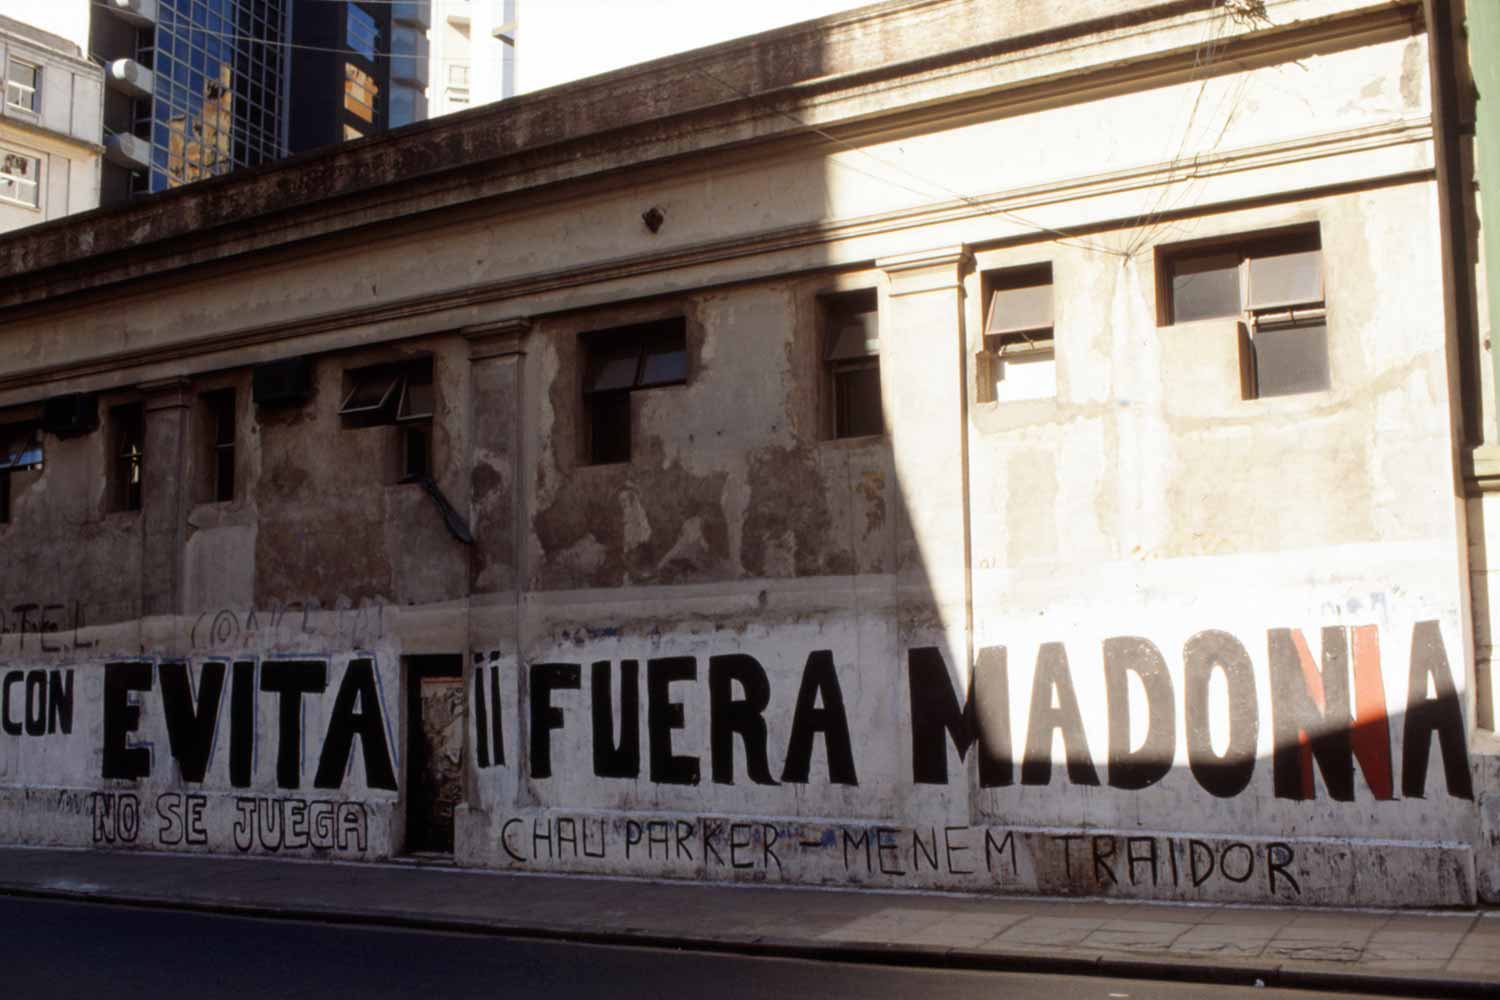 Graffiti from film of Evita